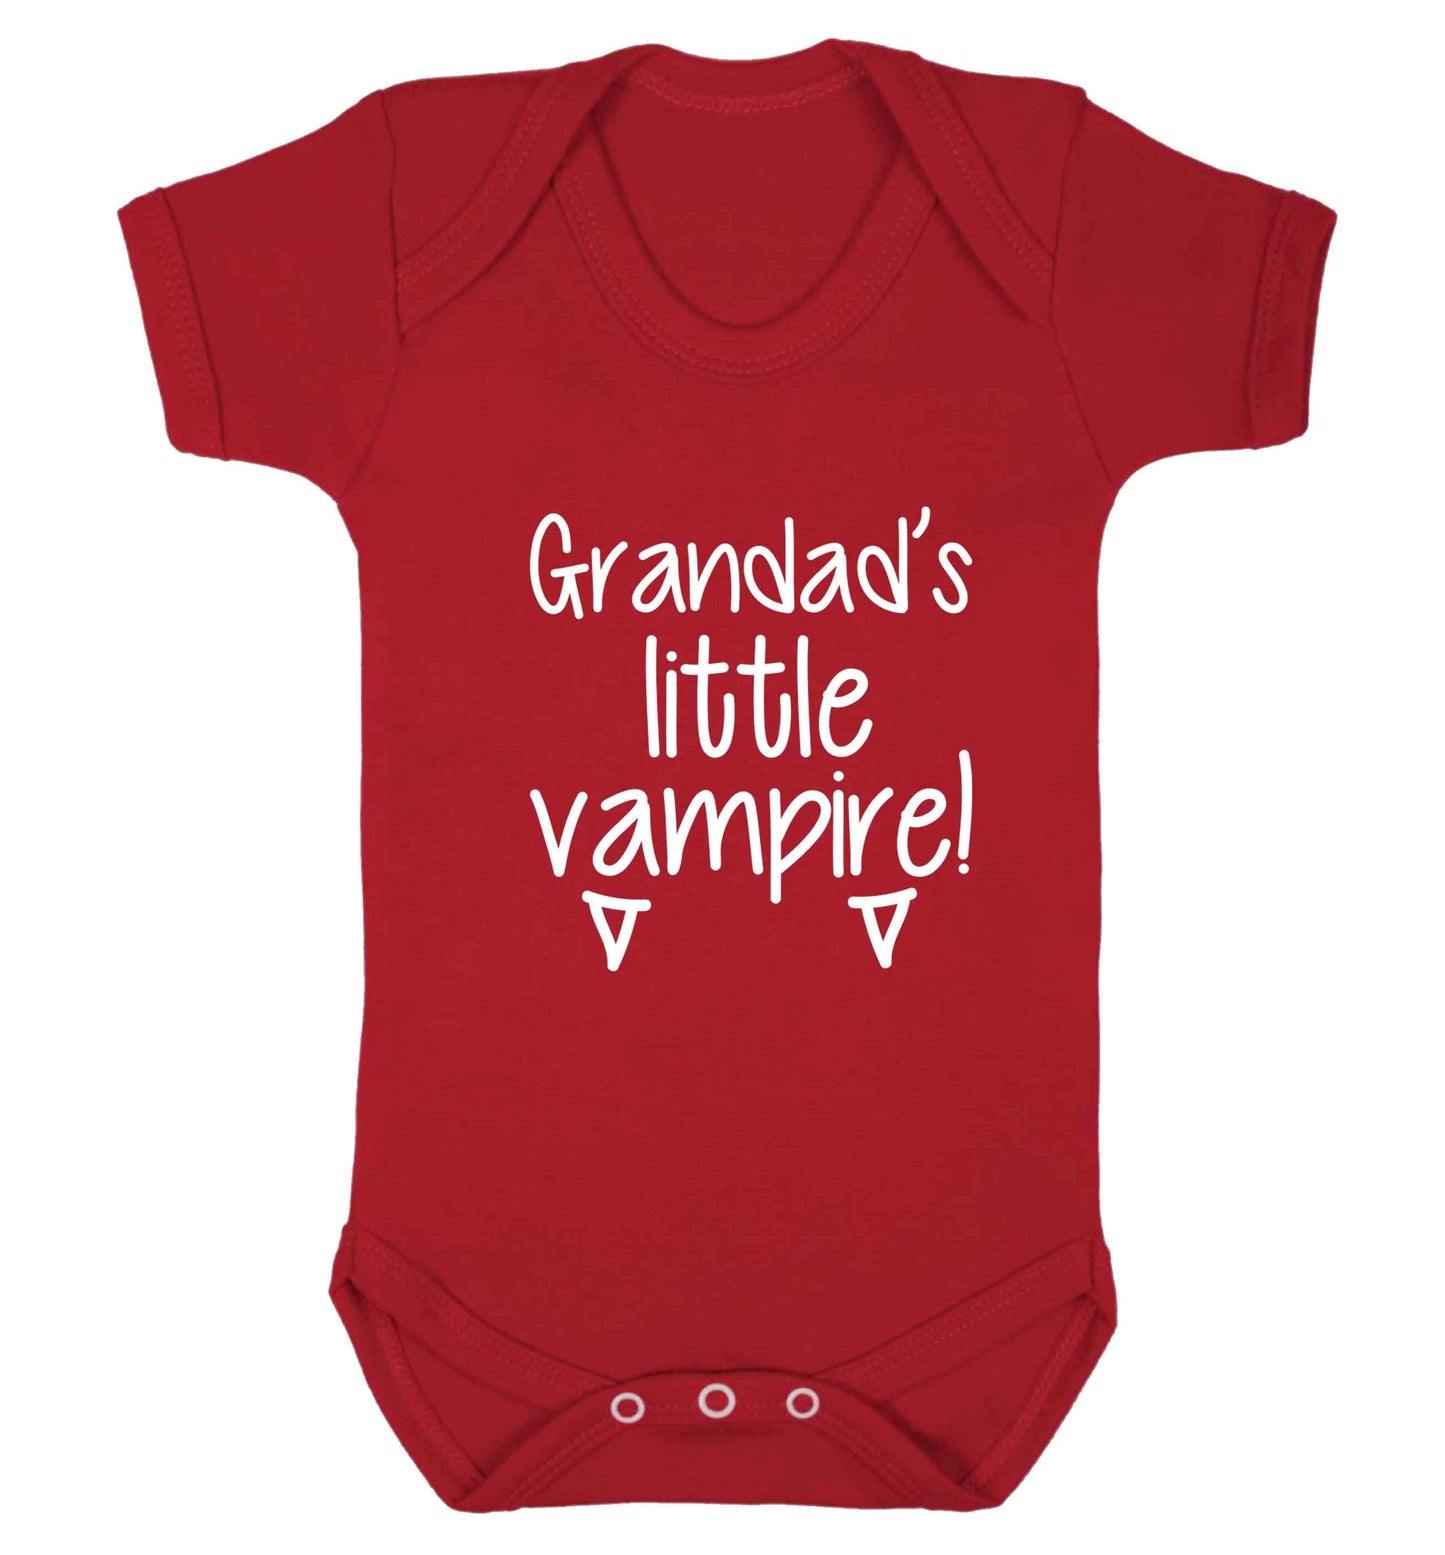 Grandad's little vampire baby vest red 18-24 months